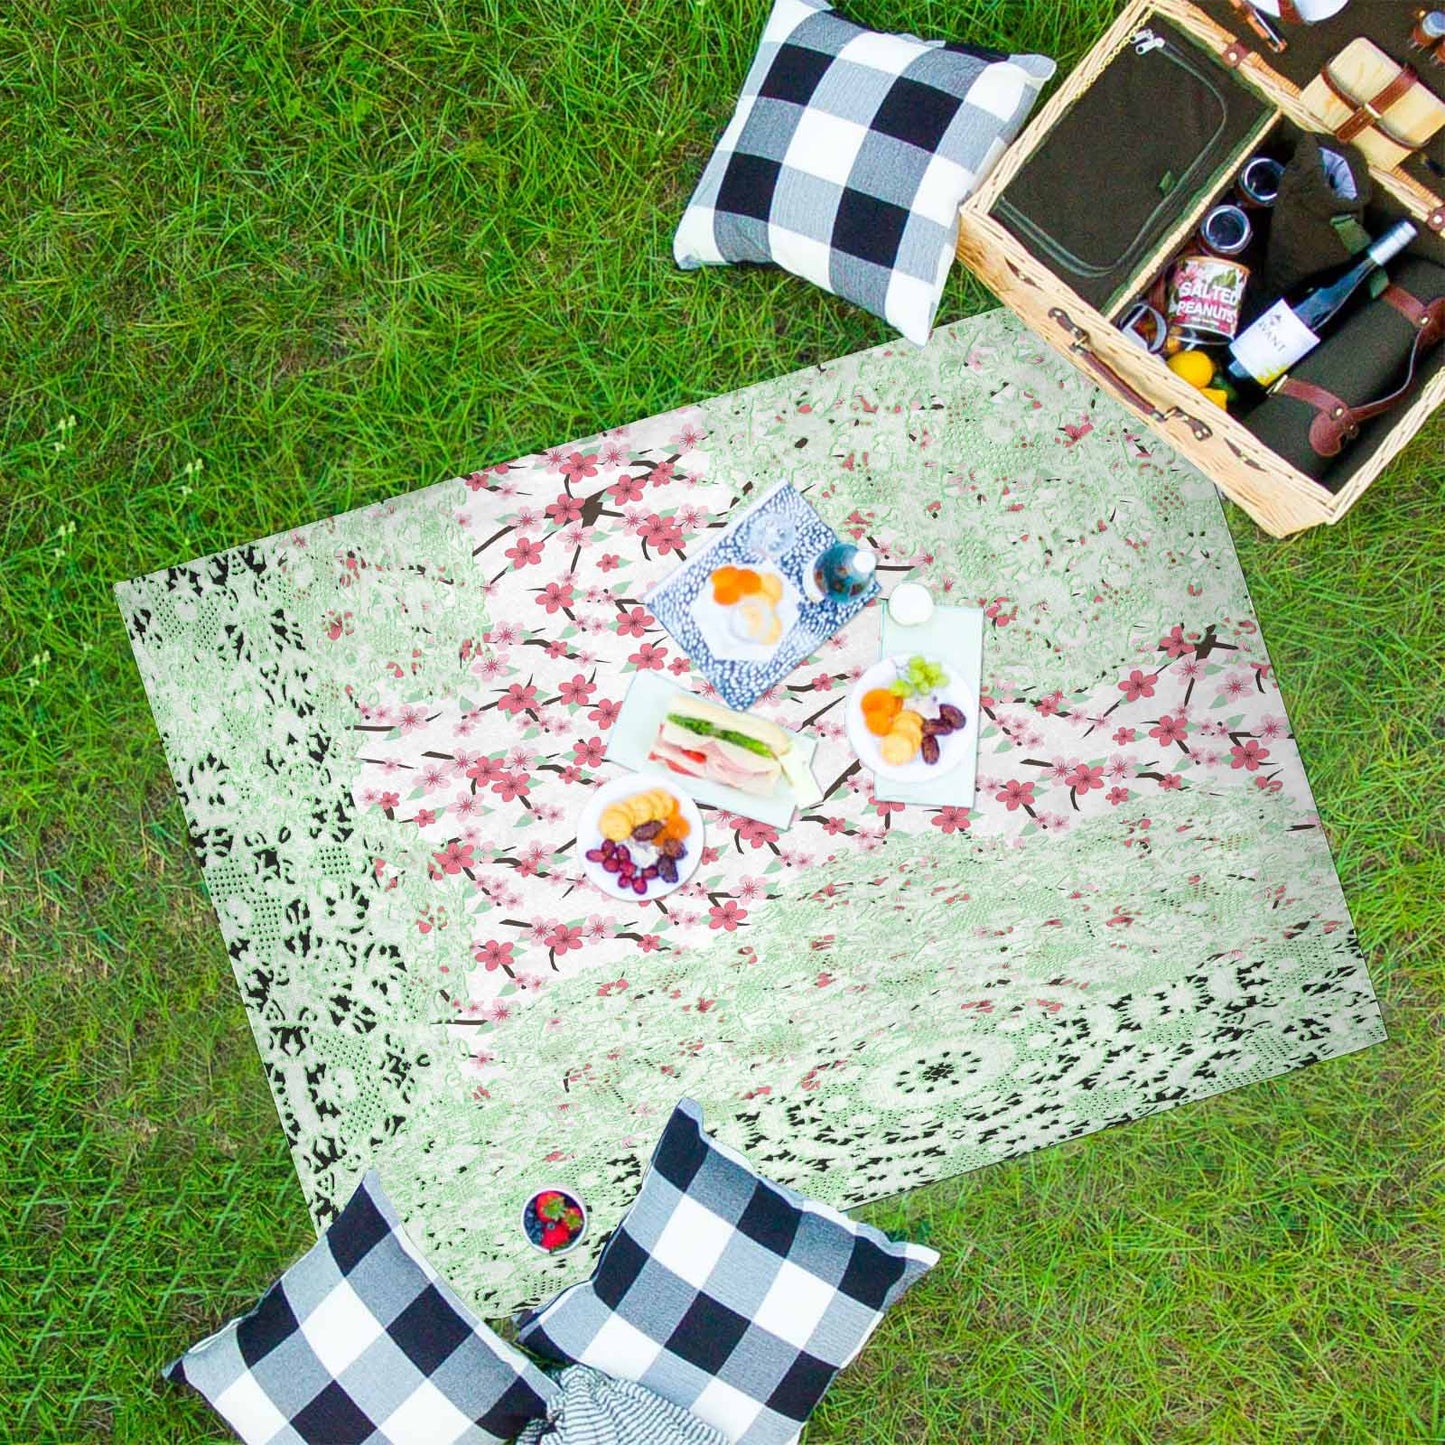 Victorian lace print waterproof picnic mat, 69 x 55in, design 10